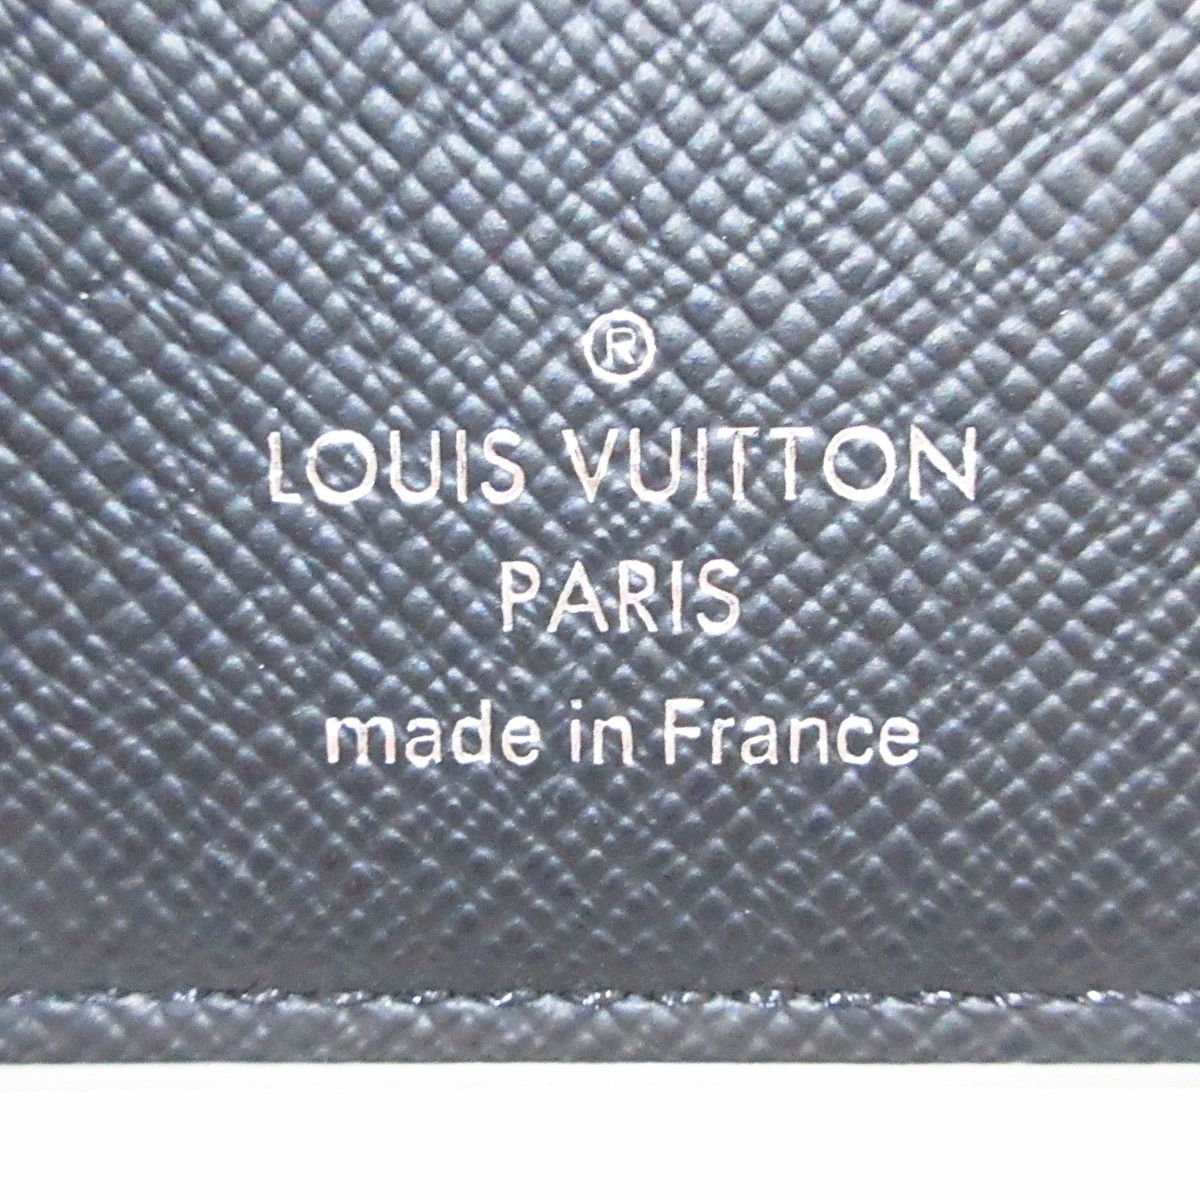 LOUIS VUITTON(ルイヴィトン) 札入れ ダミエグラフィット美品 ポルトフォイユパンス N61000 ダミエグラフィット イニシャル刻印